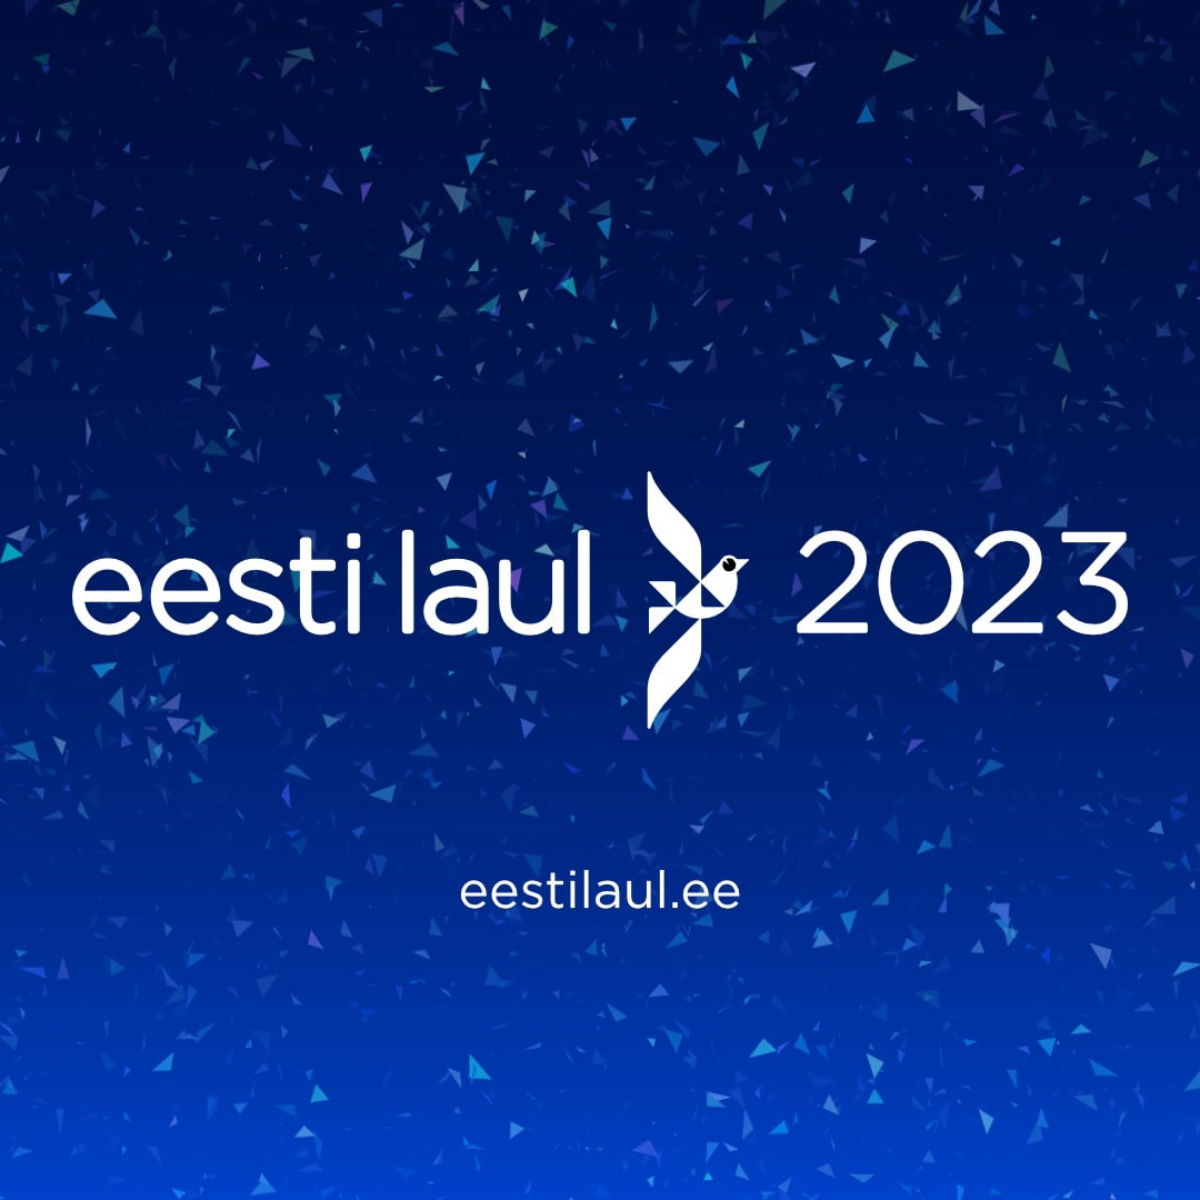 Estonia 🇪🇪 in the Eurovision Song Contest — Eesti Laul 2023 cover artwork